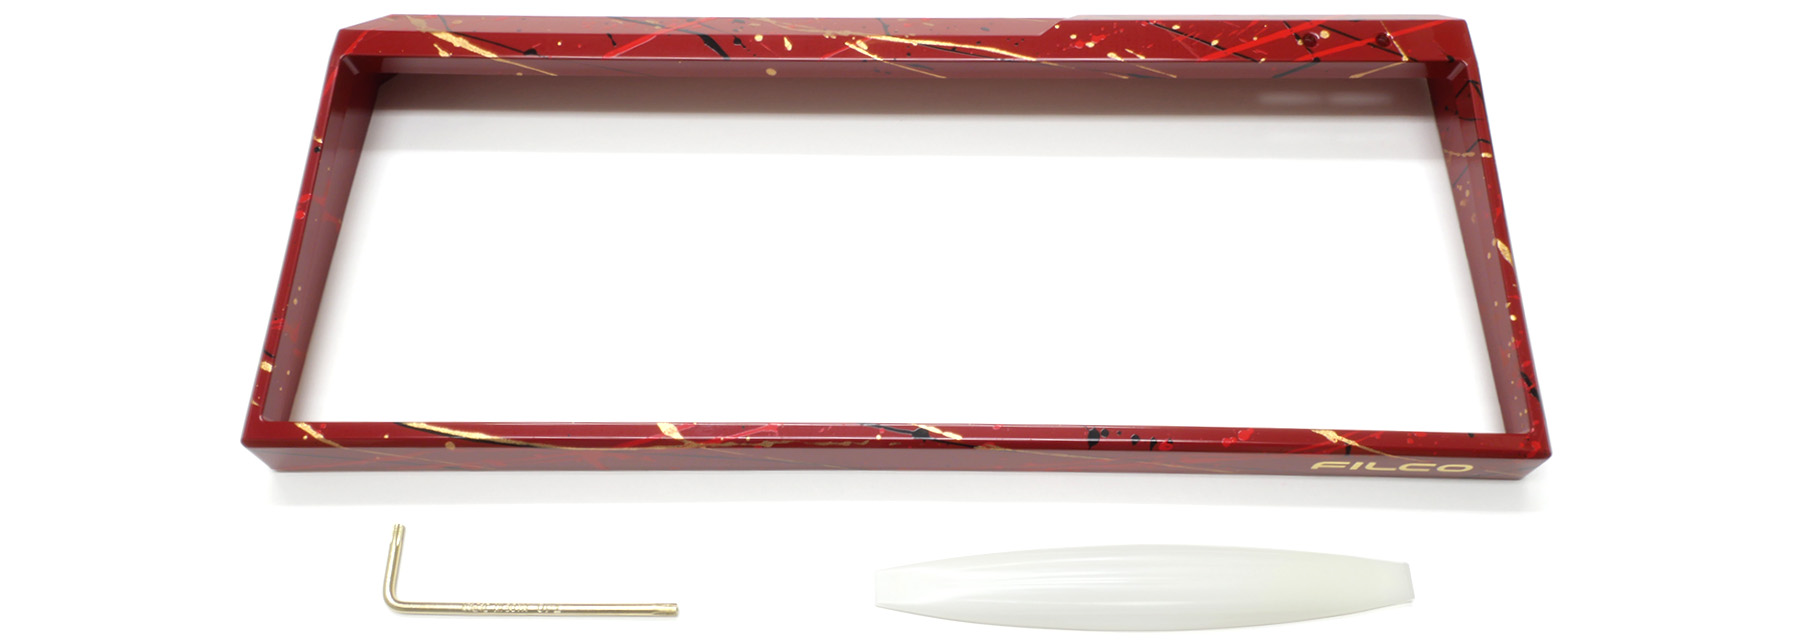 Majestouch MINILA Air 交換用フレームセット・漆 模様 しぶき塗り(赤)